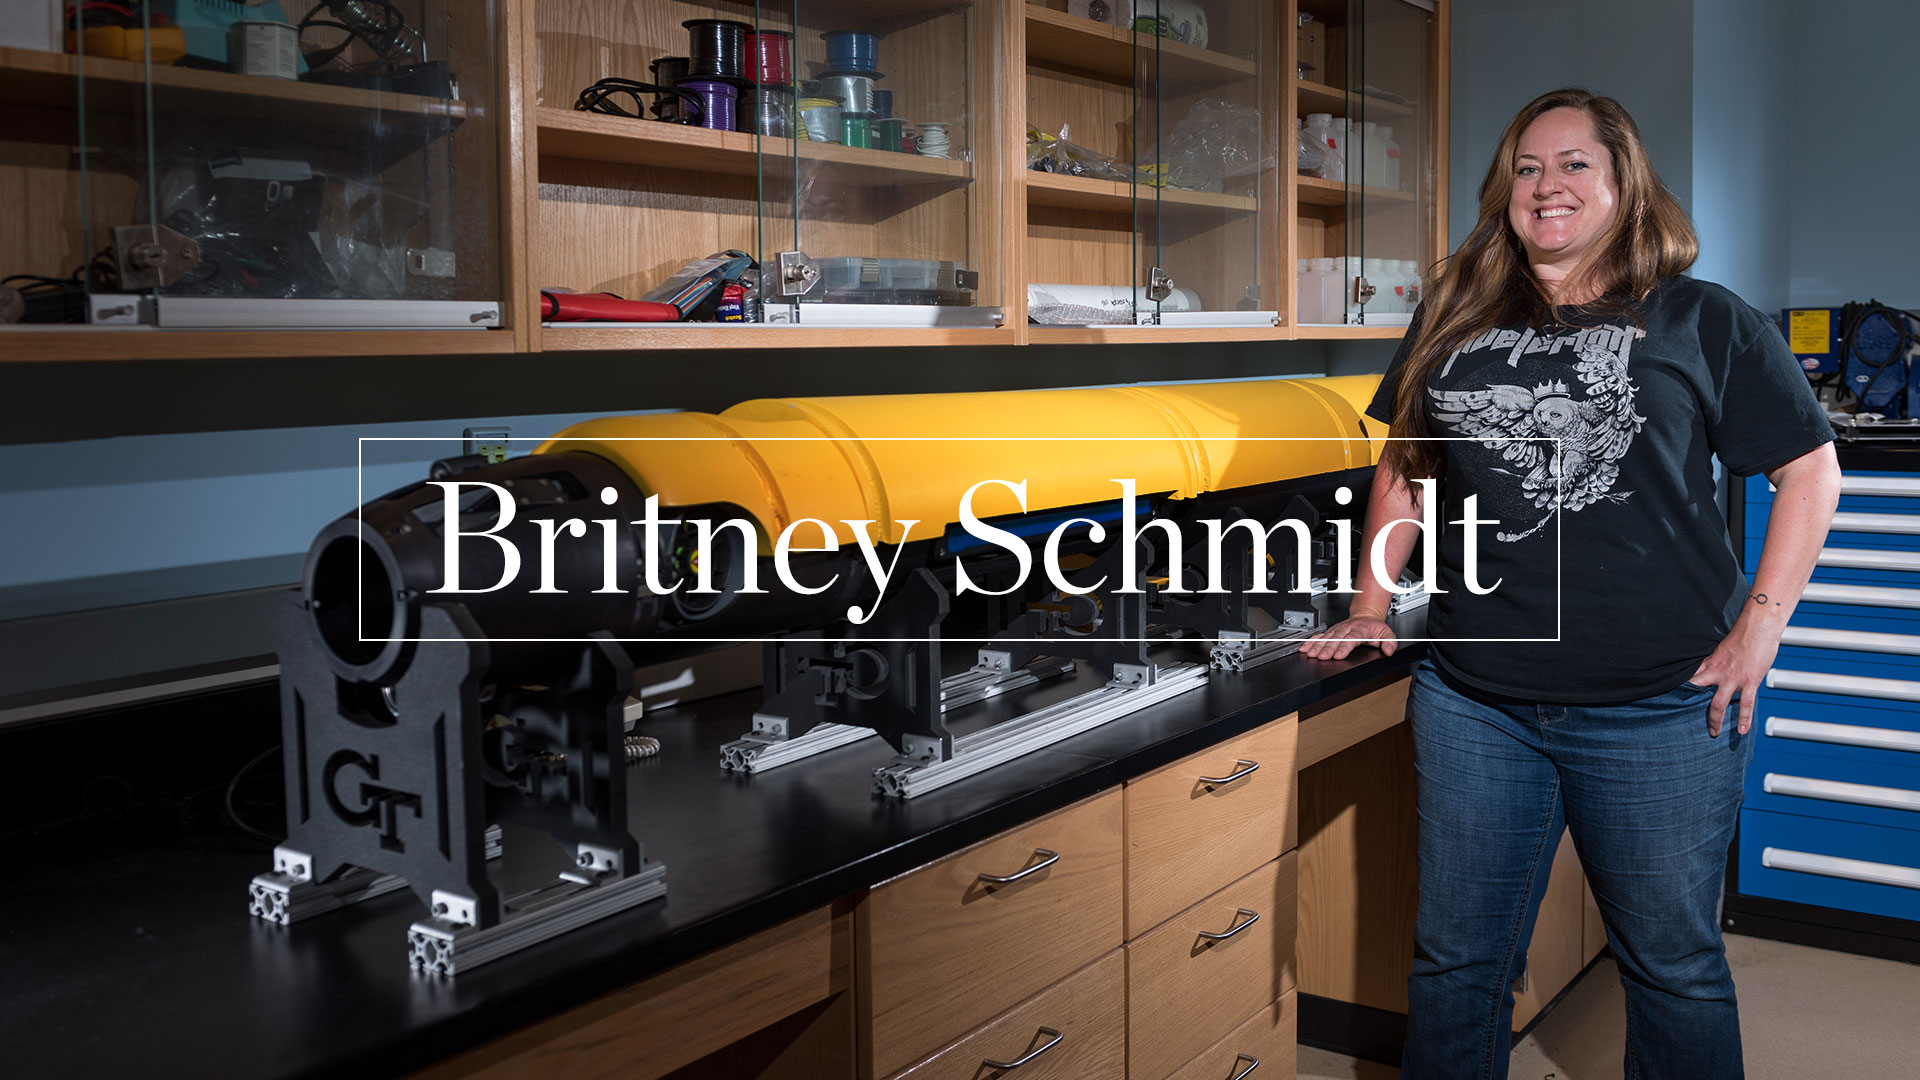 photo -  Britney Schmidt  with Icefin robot